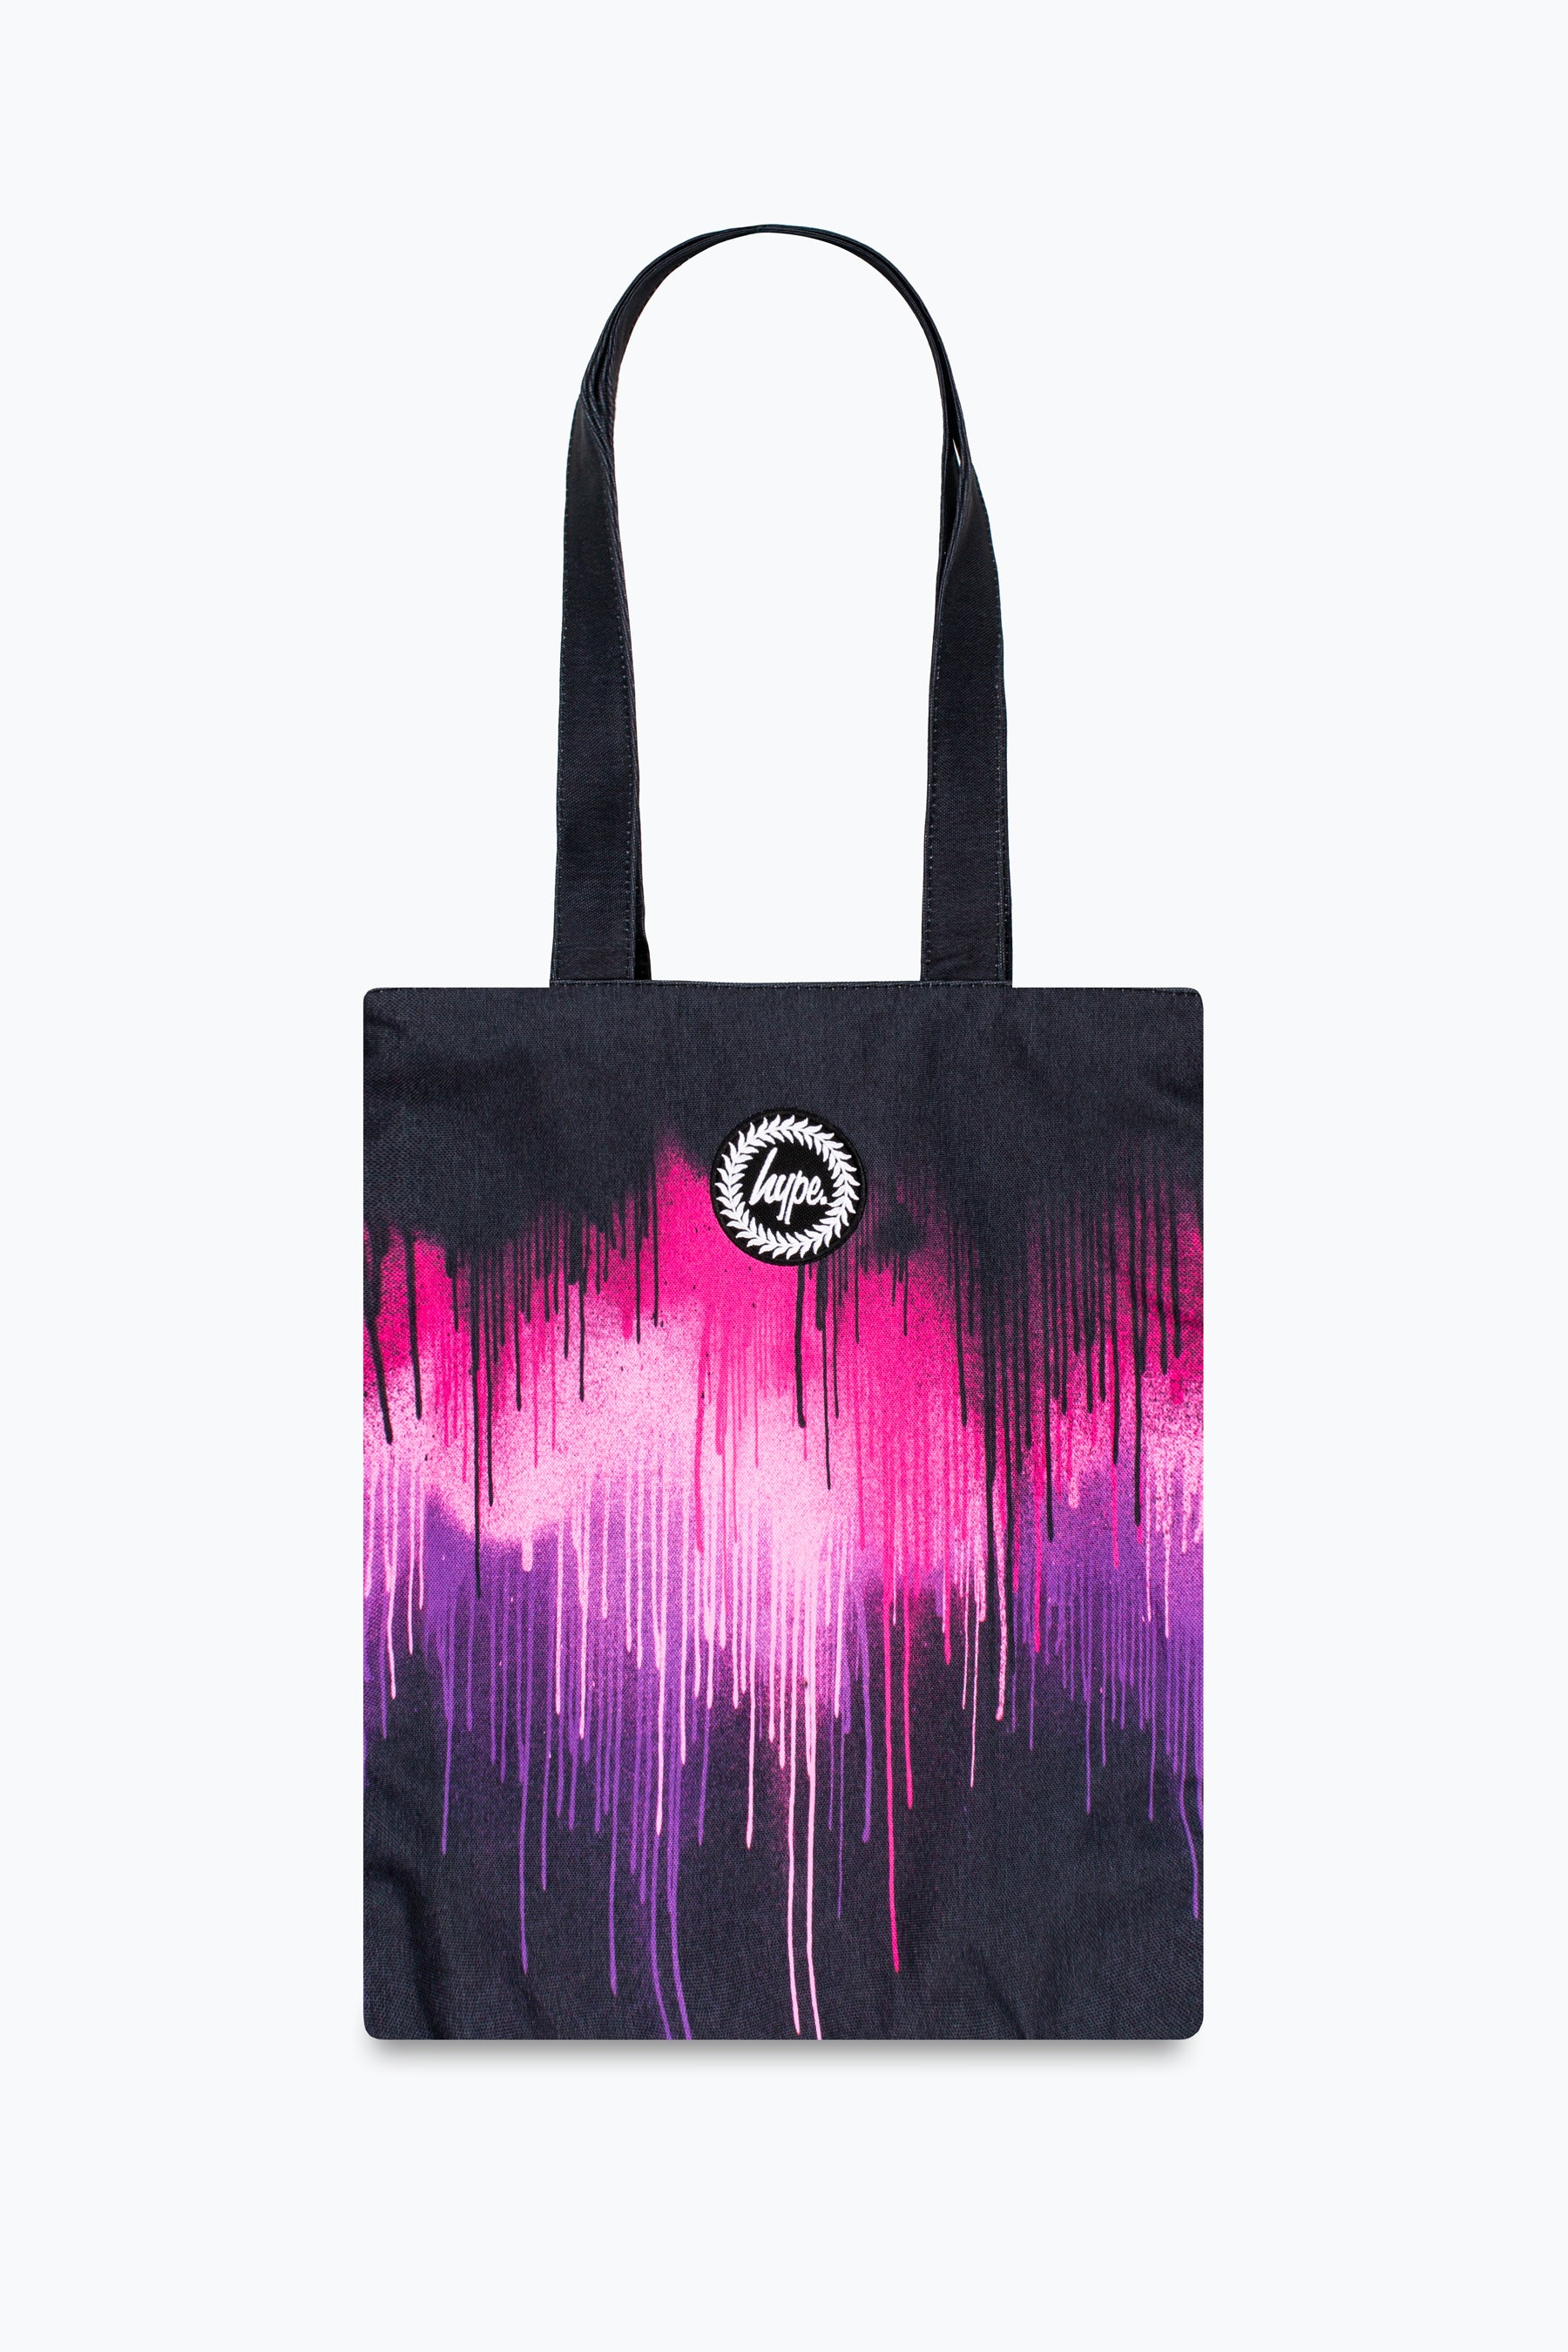 hype purple & pink drip tote bag